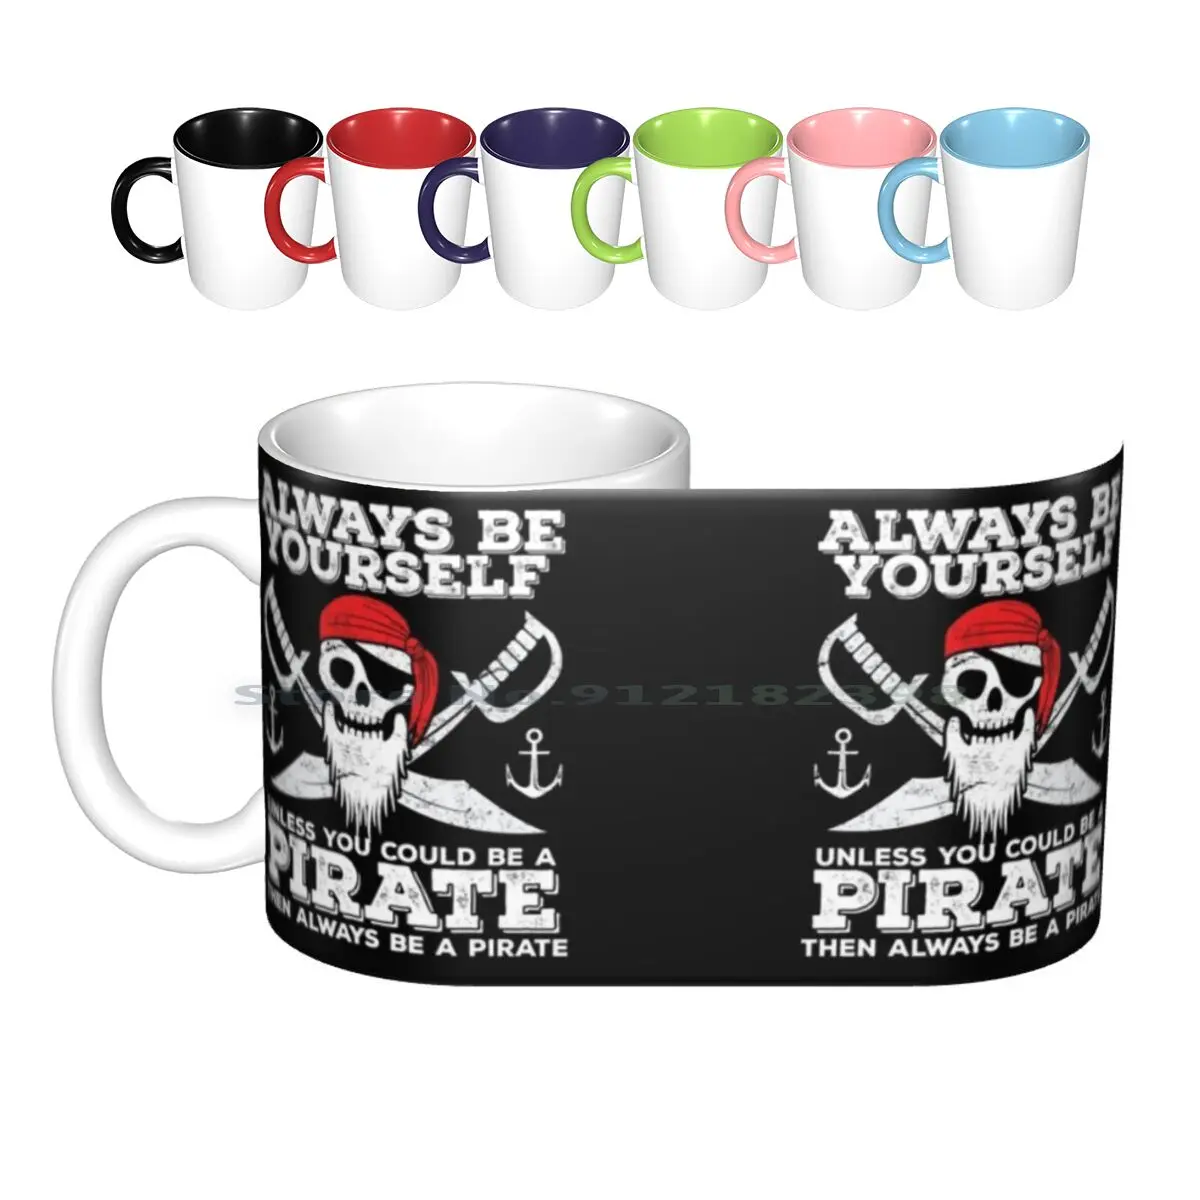 

Pirate Funny-Always Be Yourself Unless You Could Be A Pirate Then Always Be A Pirate Ceramic Mugs Coffee Cups Milk Tea Mug